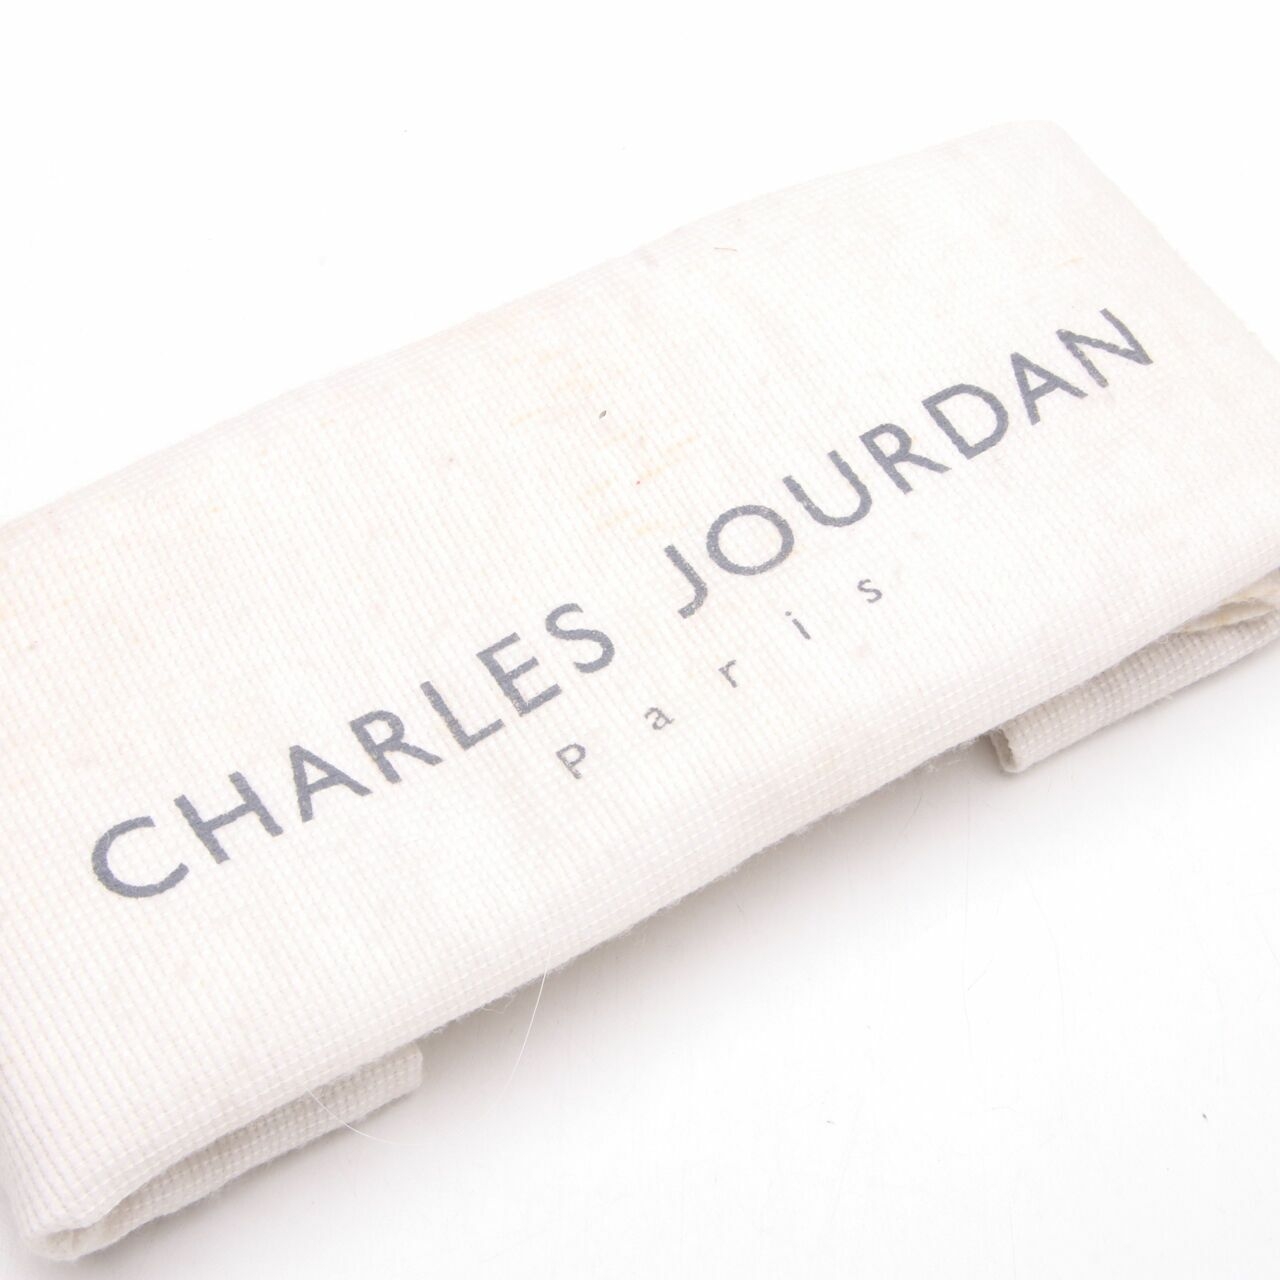 Charles Jourdan Dark Grey Shoulder Bag